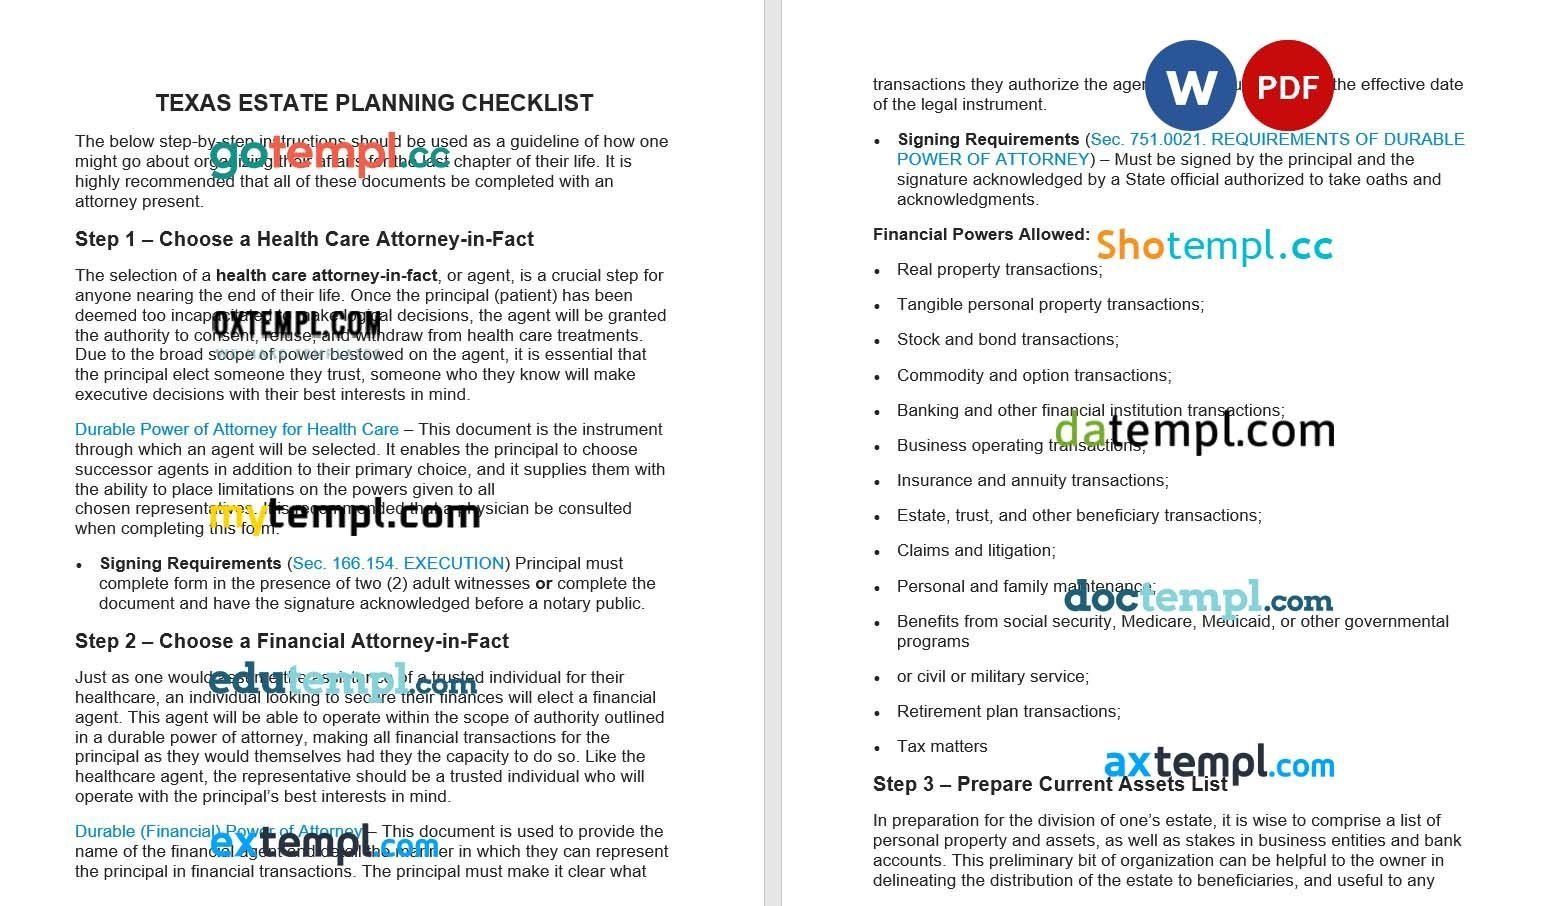 Texas Estate Planning Checklist example, fully editable